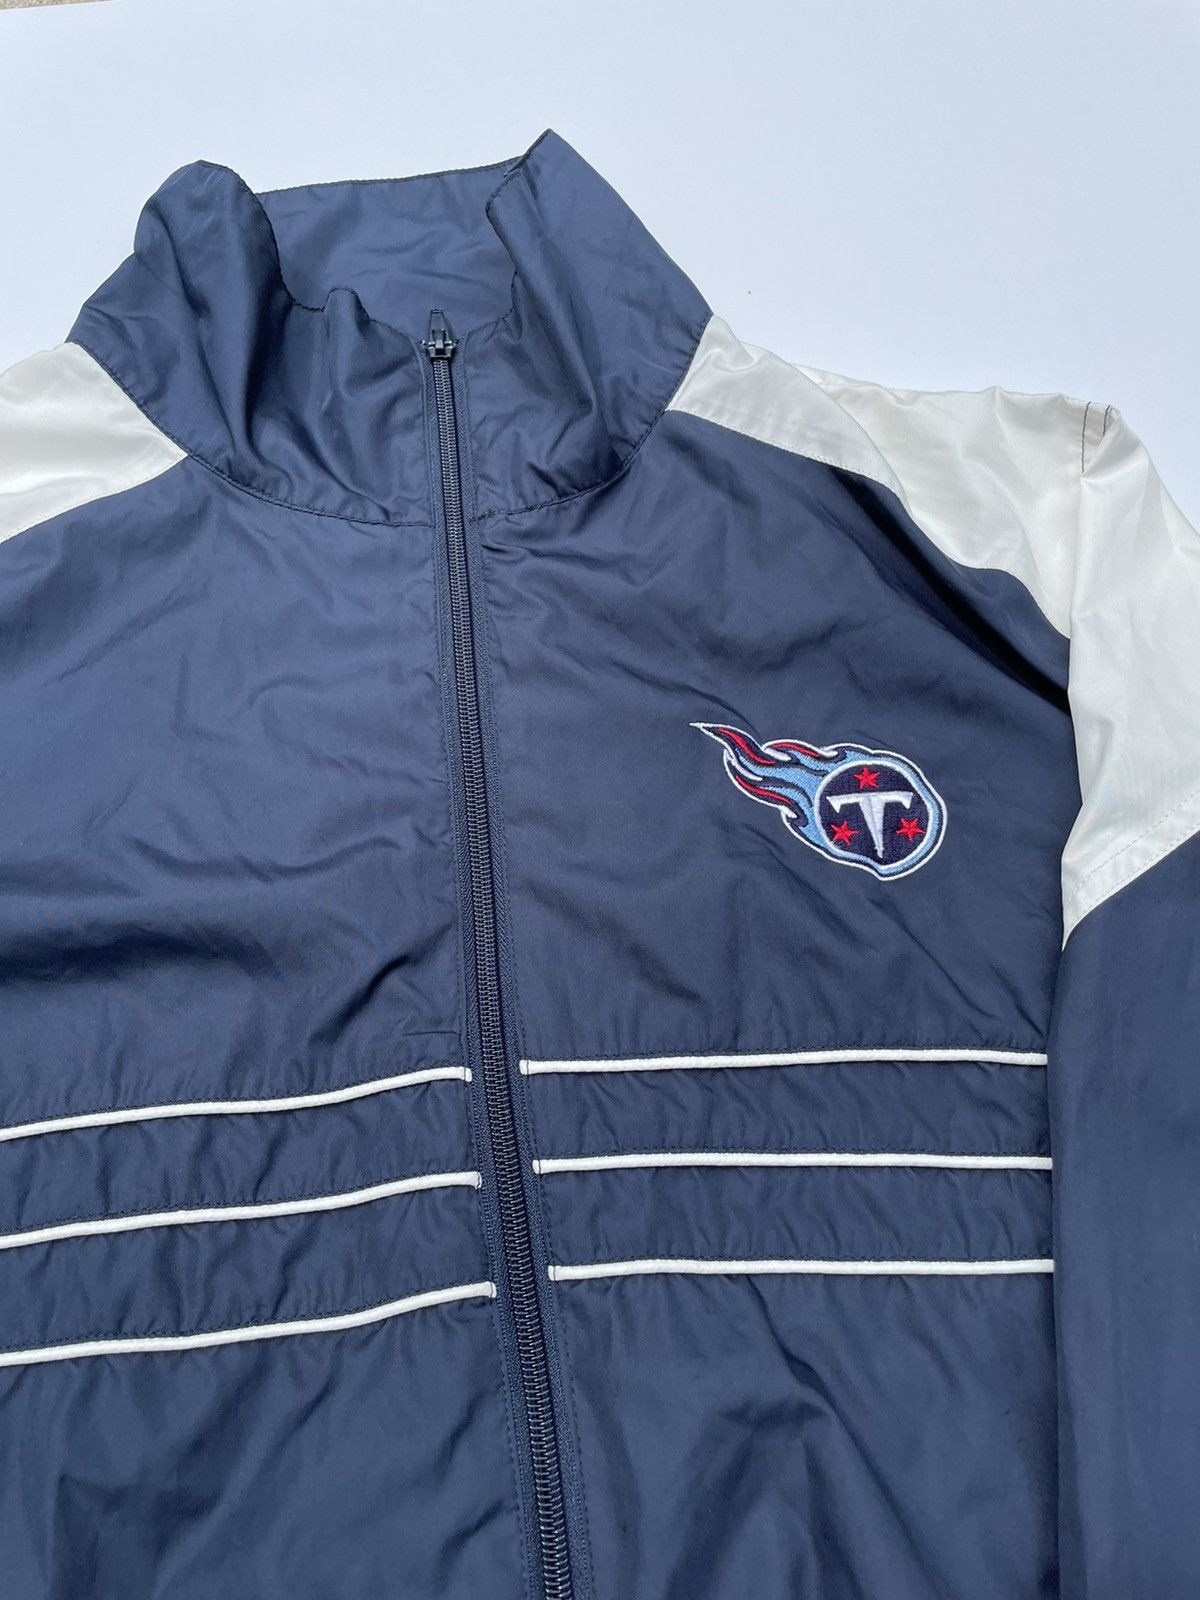 NFL vintage 90s NFL TENNESSEE TITANS windbreaker jacket Size US XL / EU 56 / 4 - 2 Preview